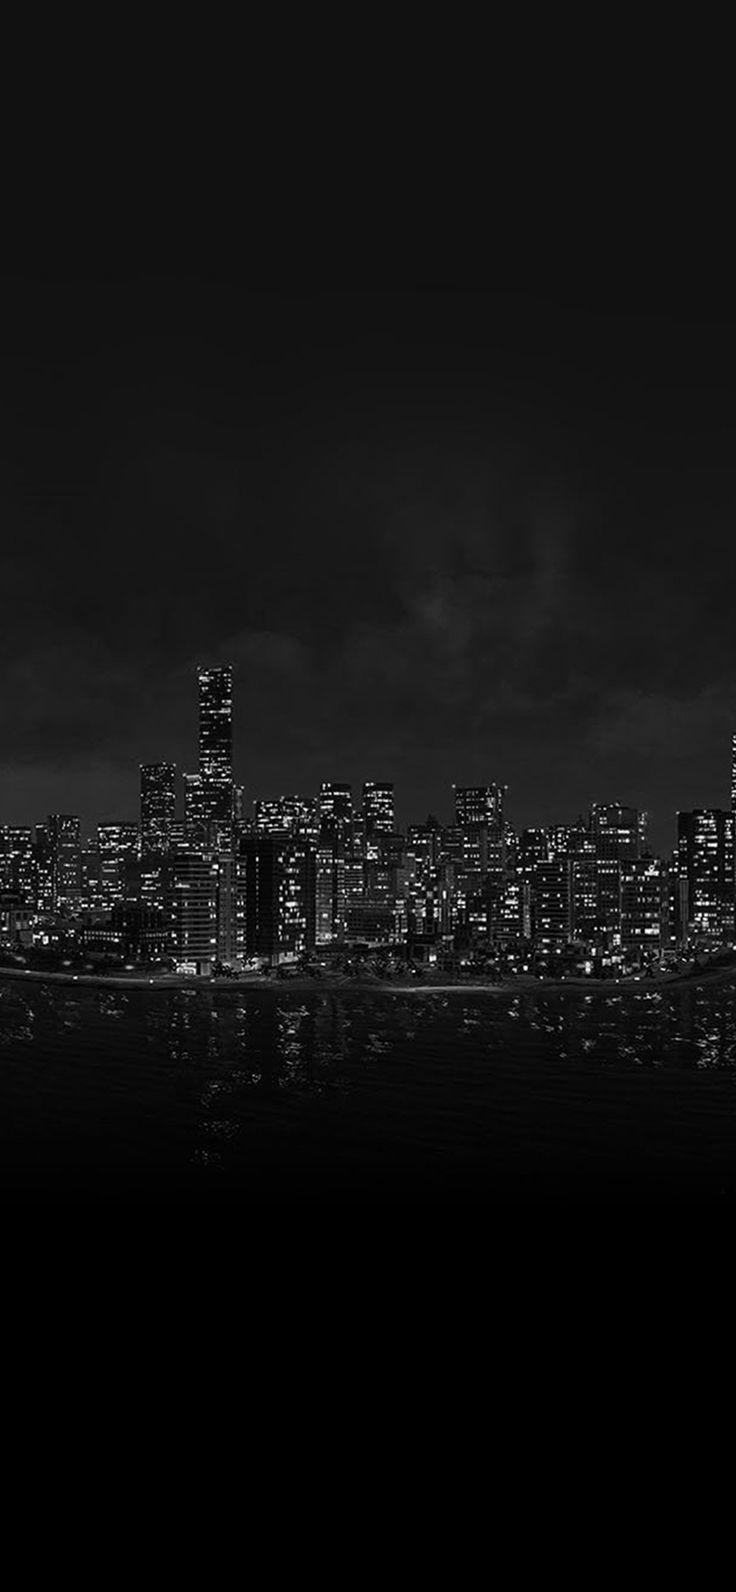 WatcHDog Night City Light From Sea iPhone X Wallpaper